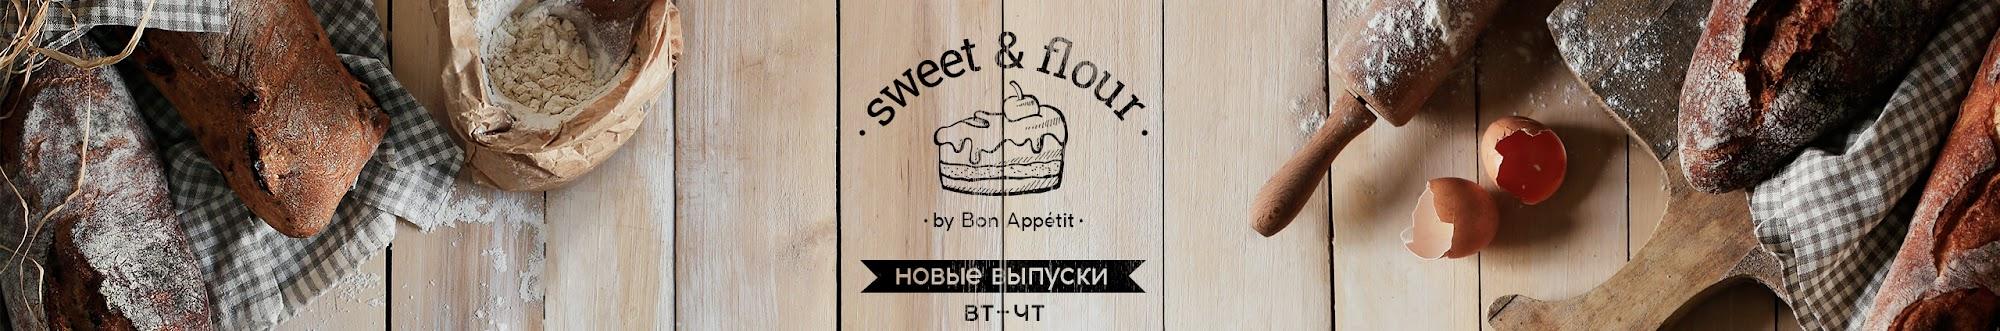 sweet & flour